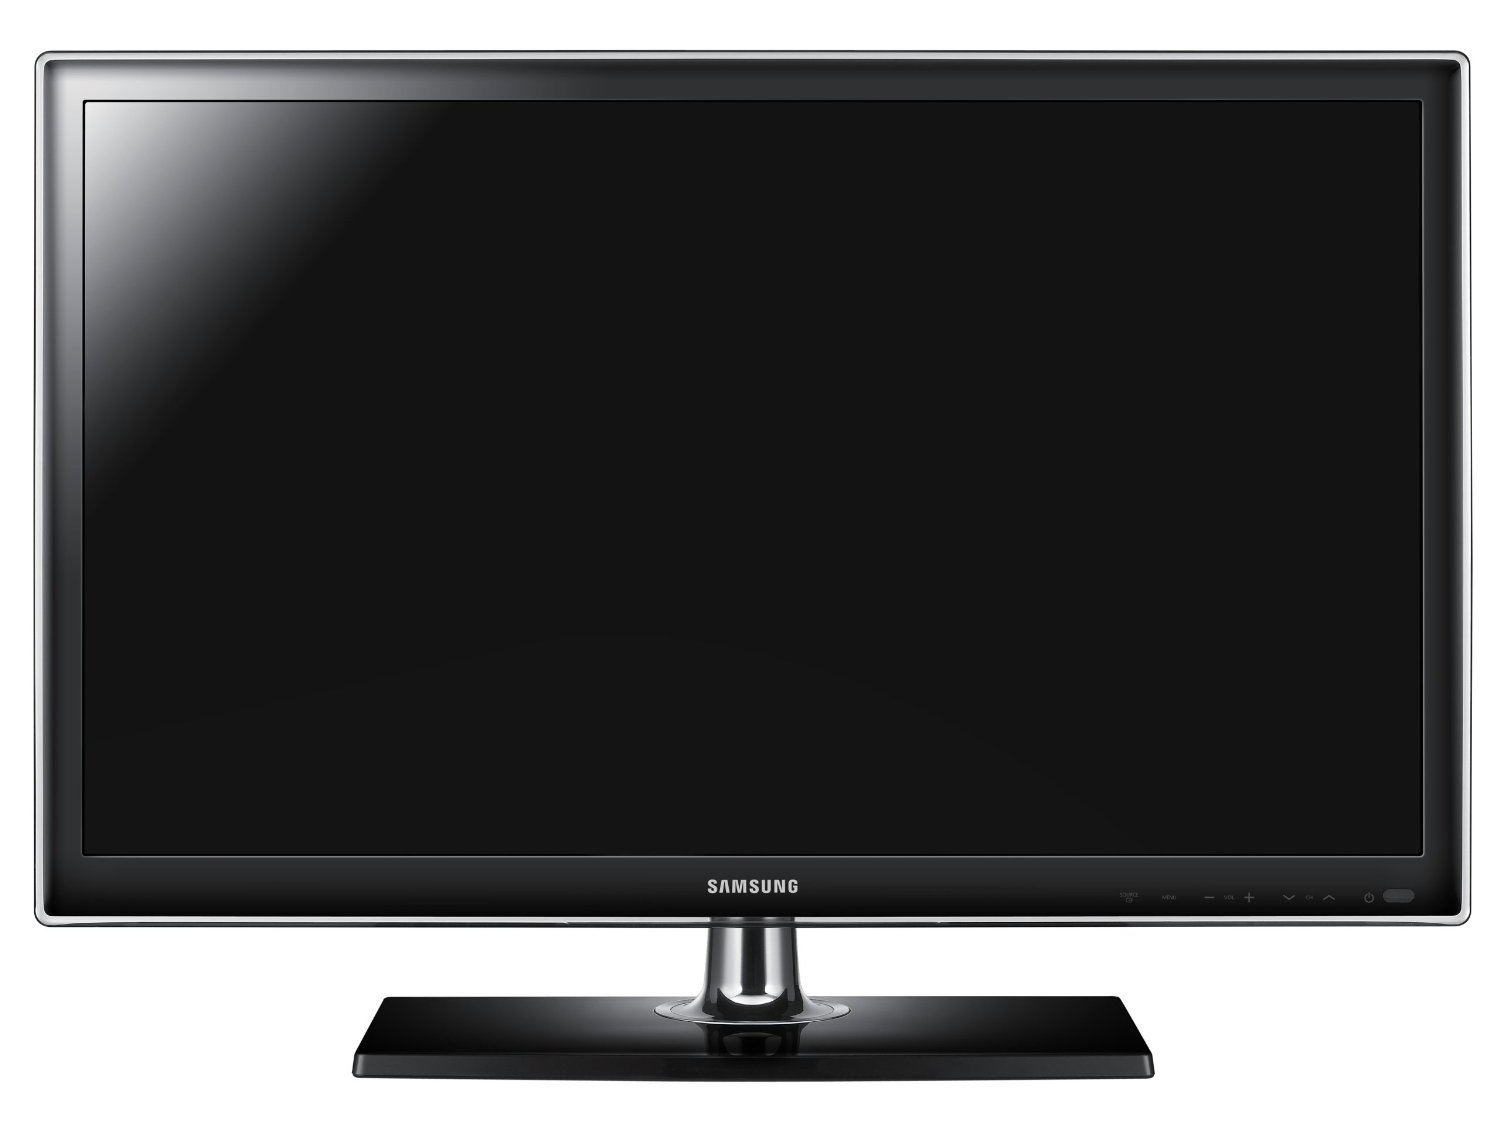 Samsung 46 Inch LED TV